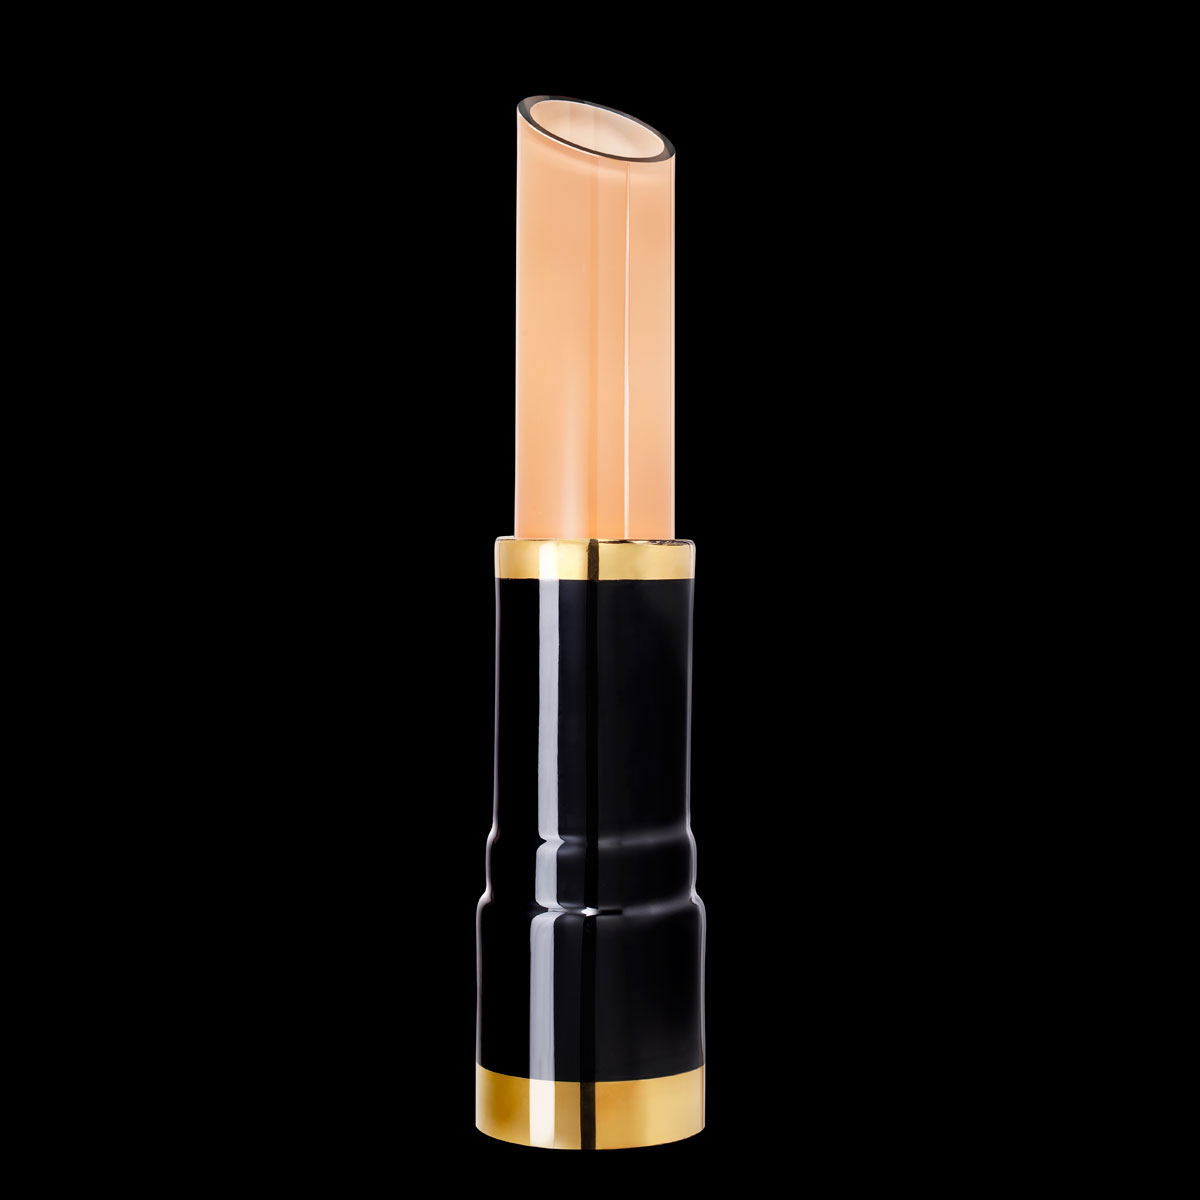 Kosta Boda Art Glass, Asa Jungnelius Make Up Lipstick Beige, Limited Edition